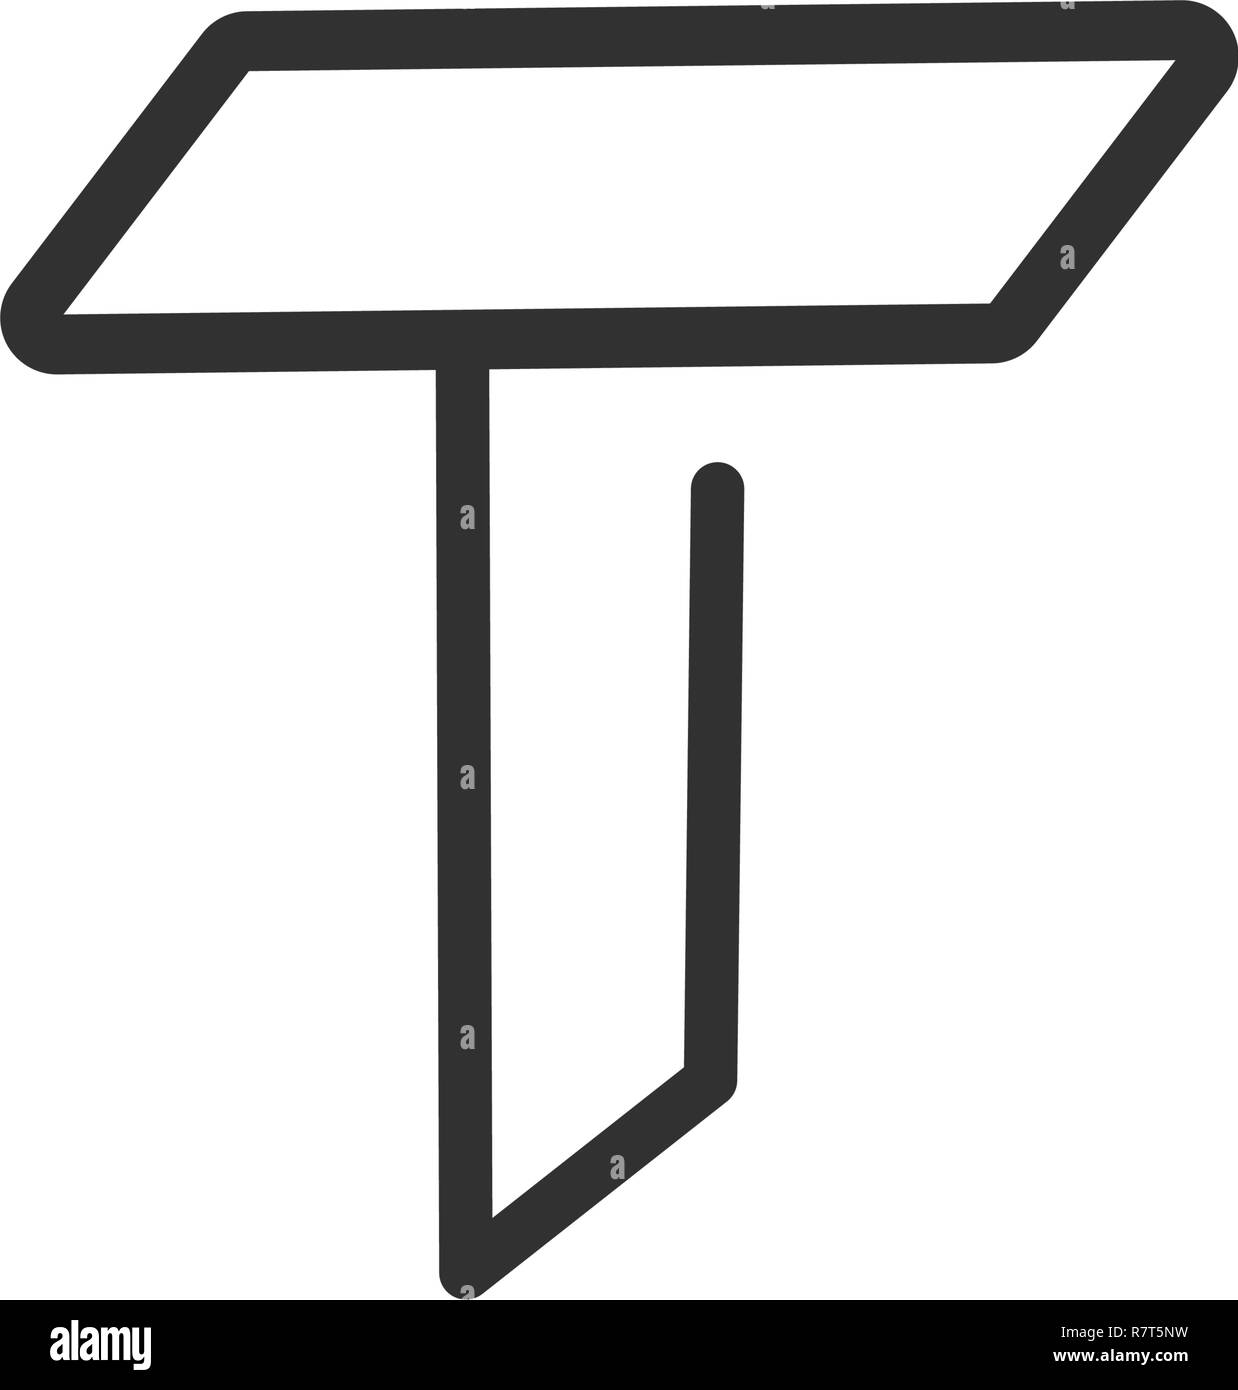 Elegant initial letter T logo line unique modern design, vector illustration isolated on modern background. Stock Vector